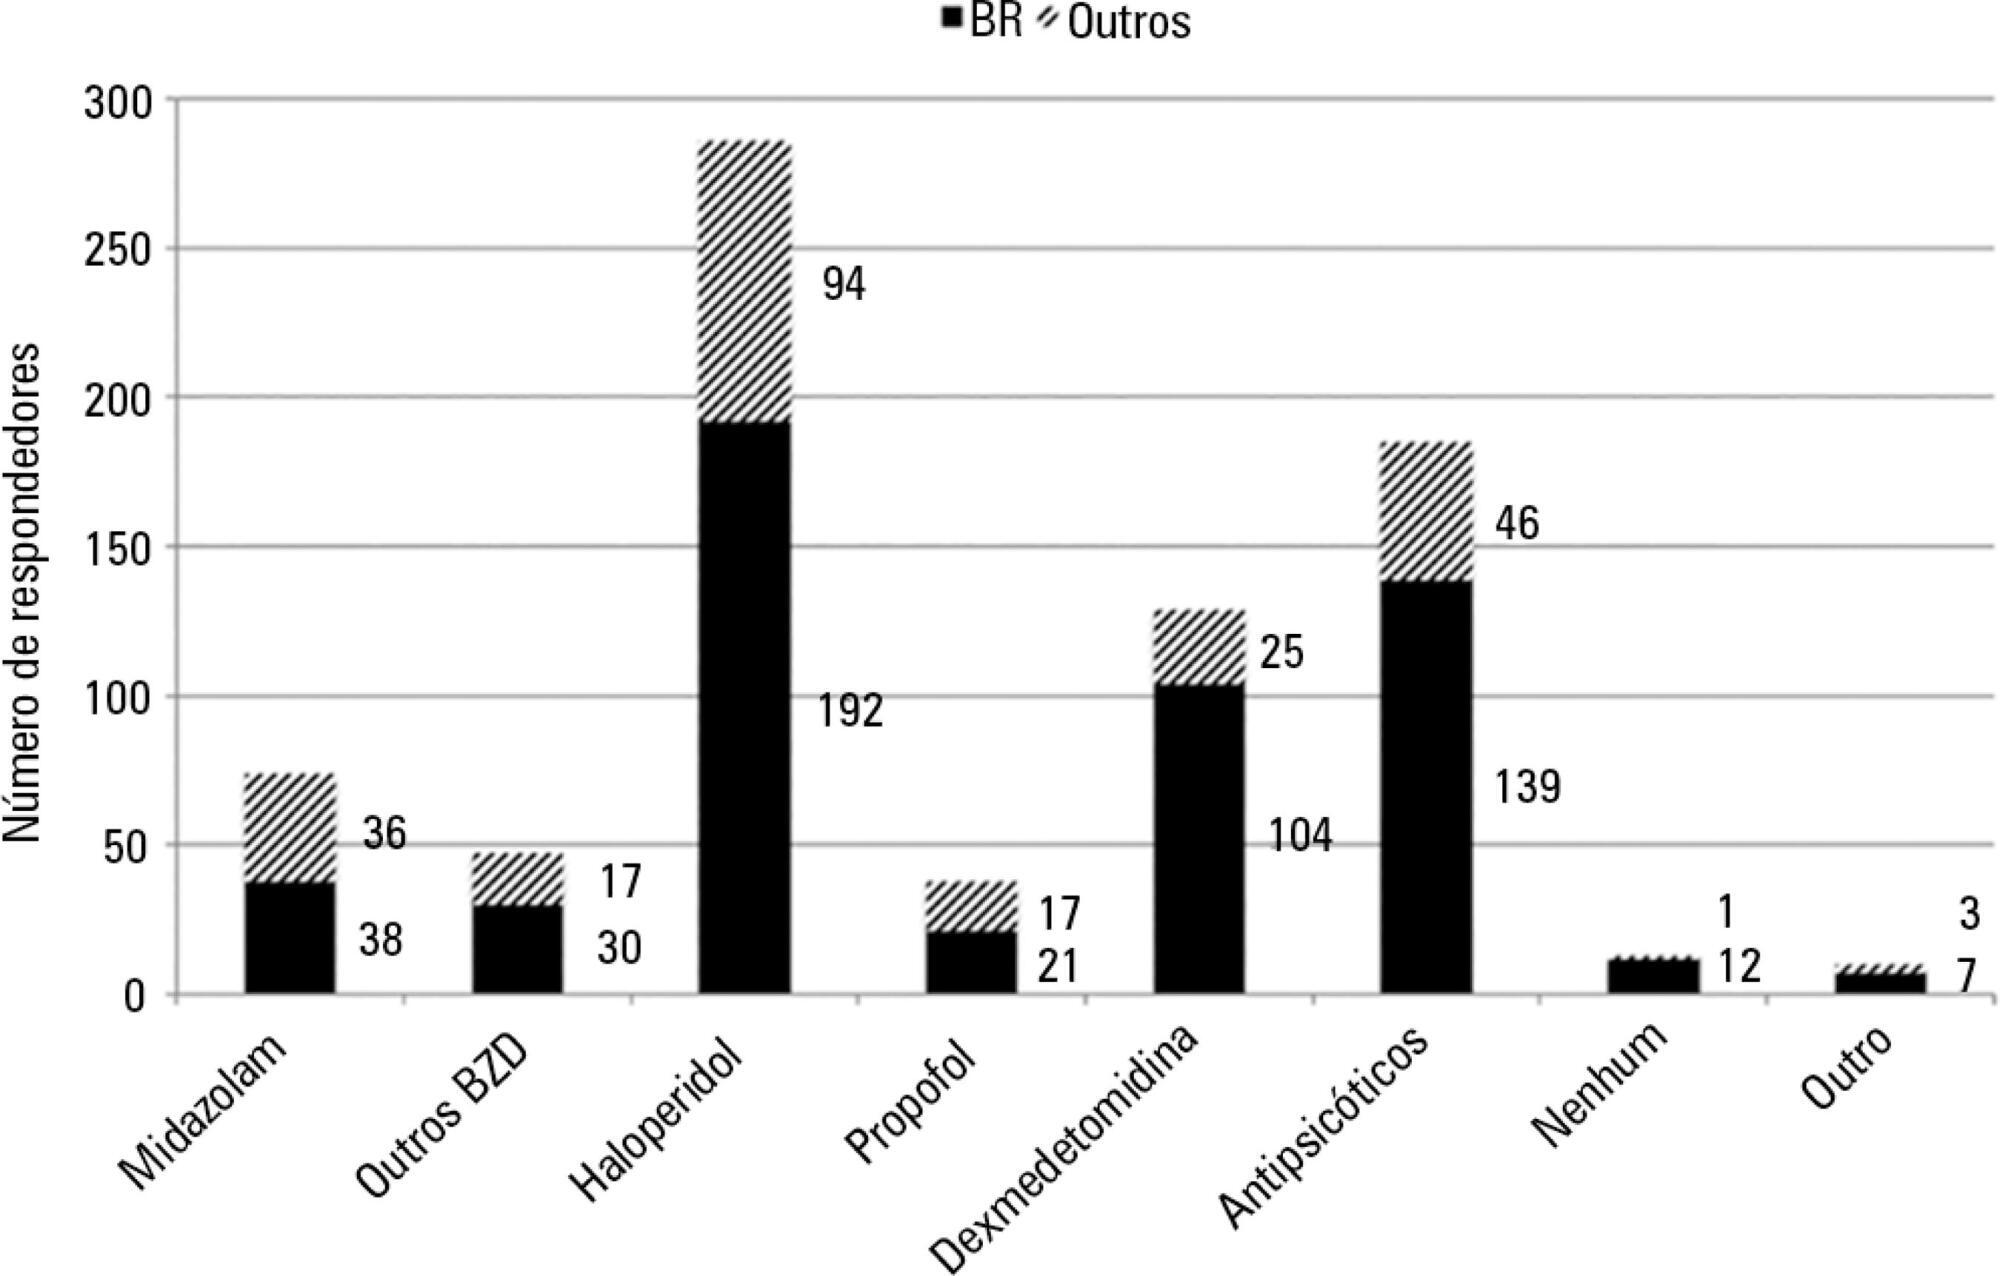 Delirium in intensive care unit patients under noninvasive ventilation: a multinational survey